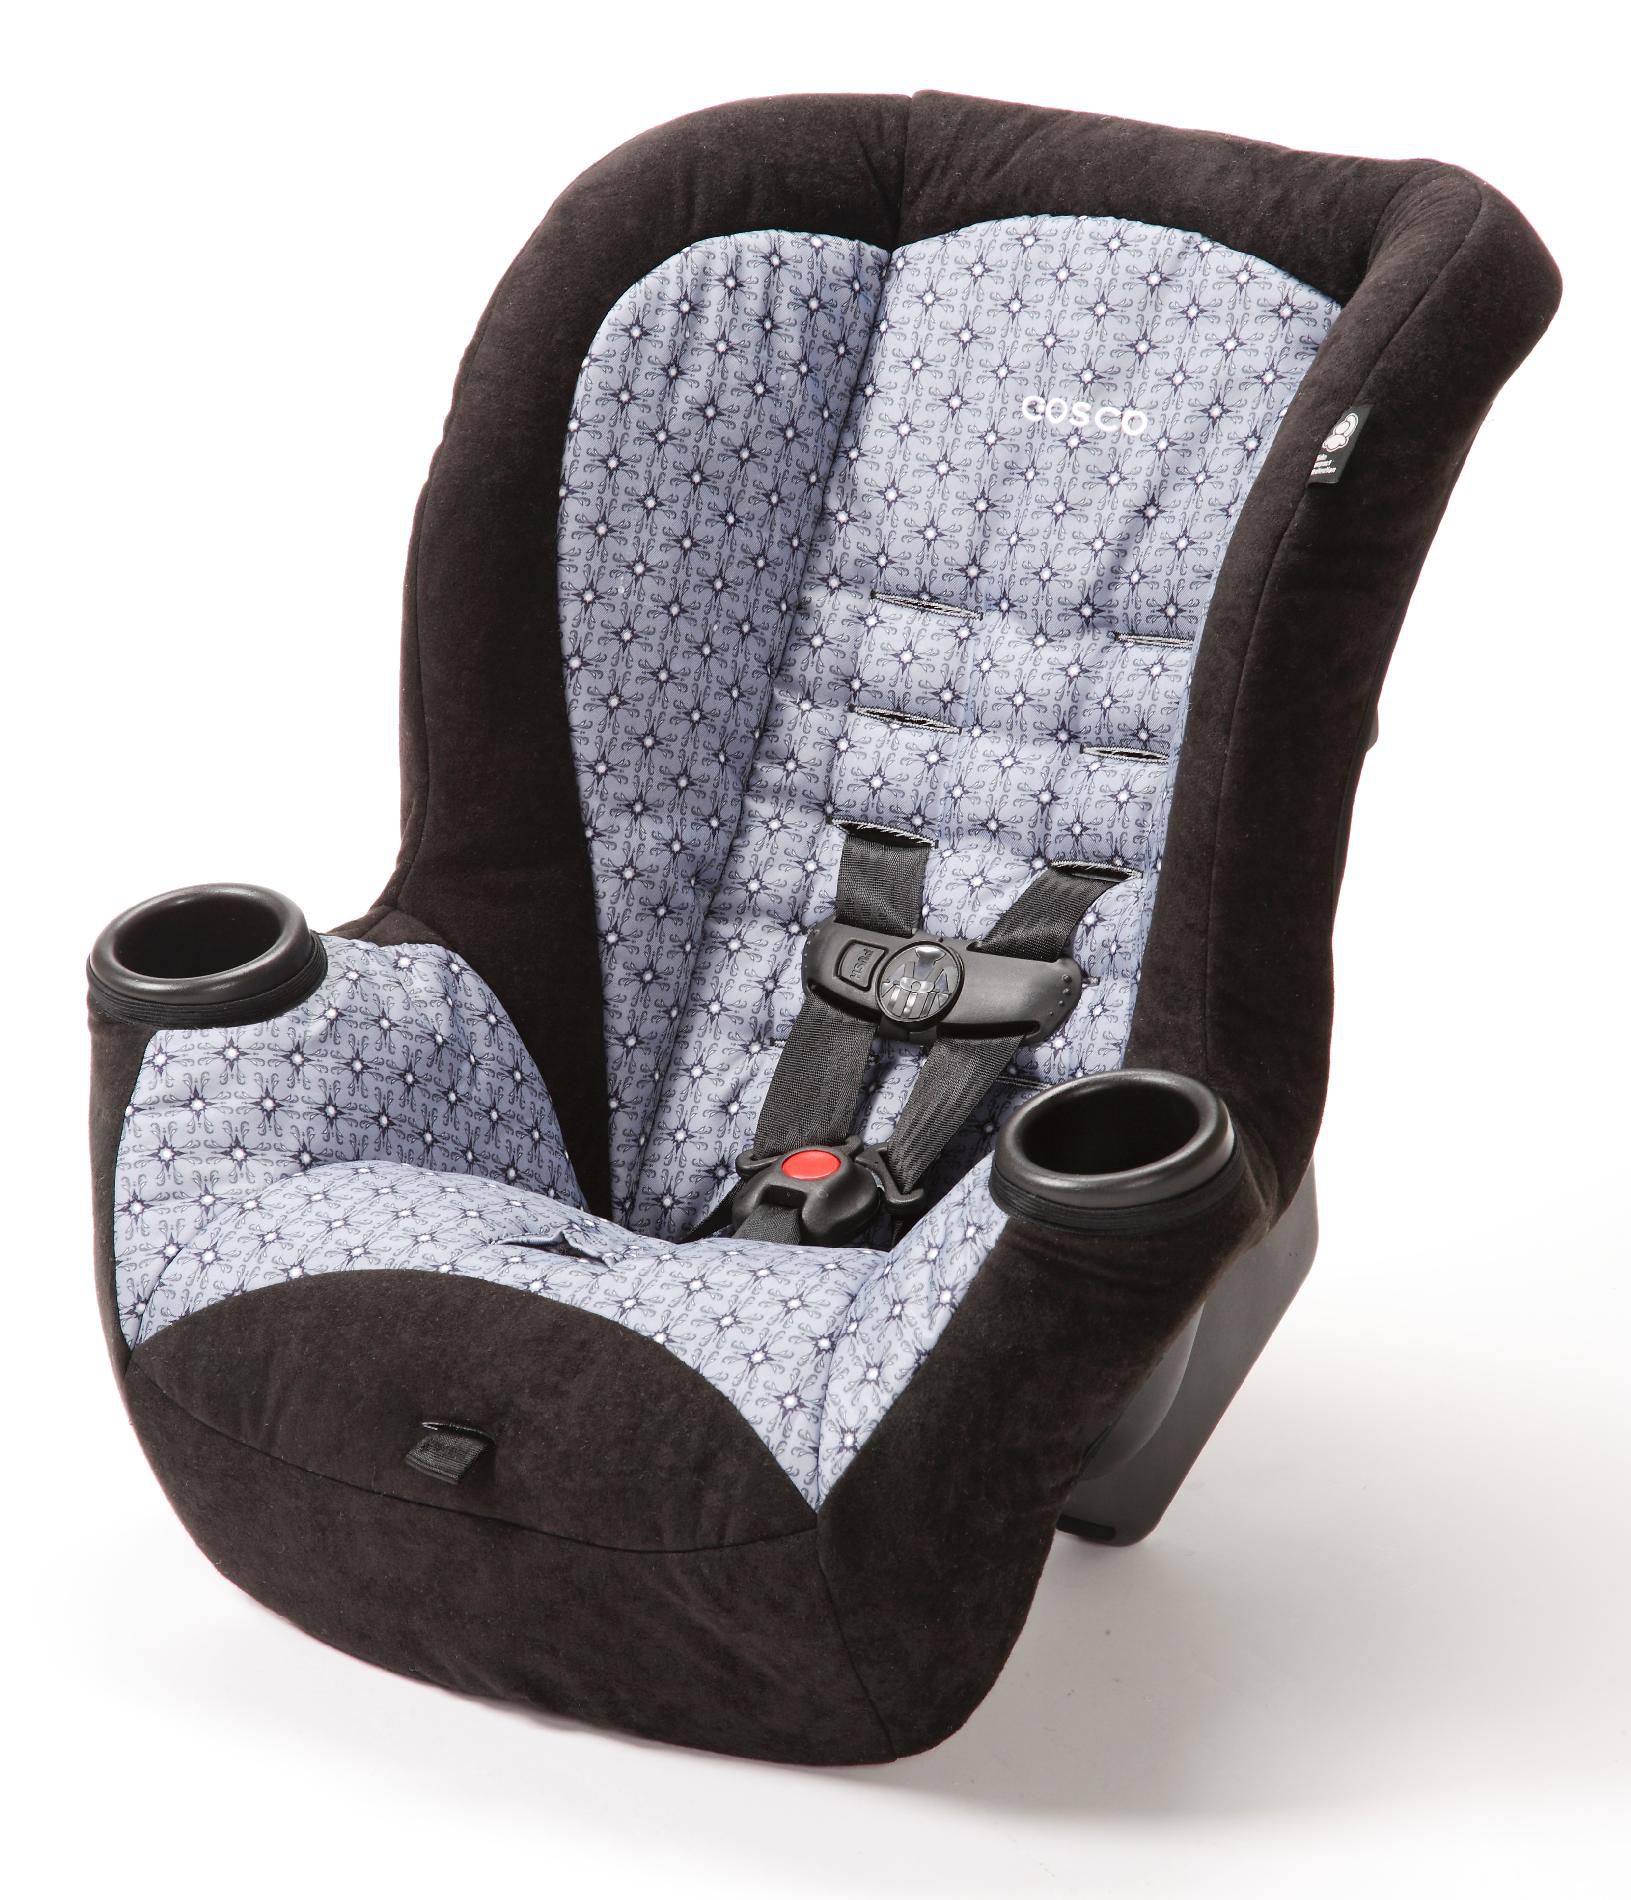 cosco infant car seat instructions